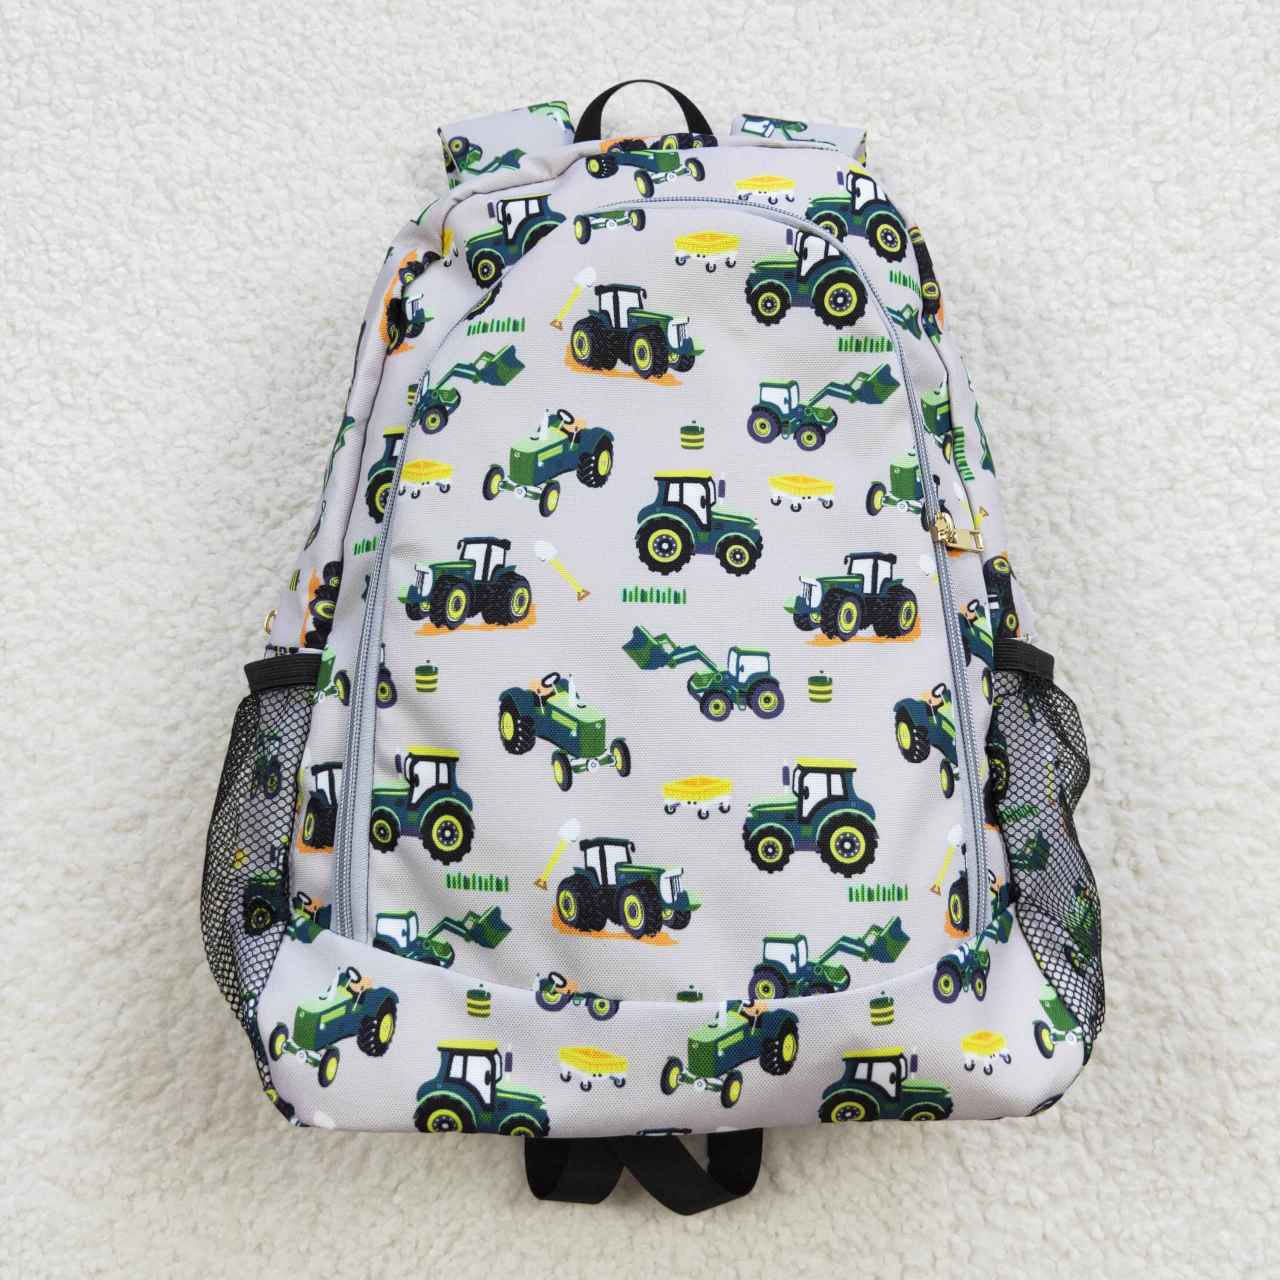 BA0091 Kids Boys Cartoon Mouse Backpack Bag